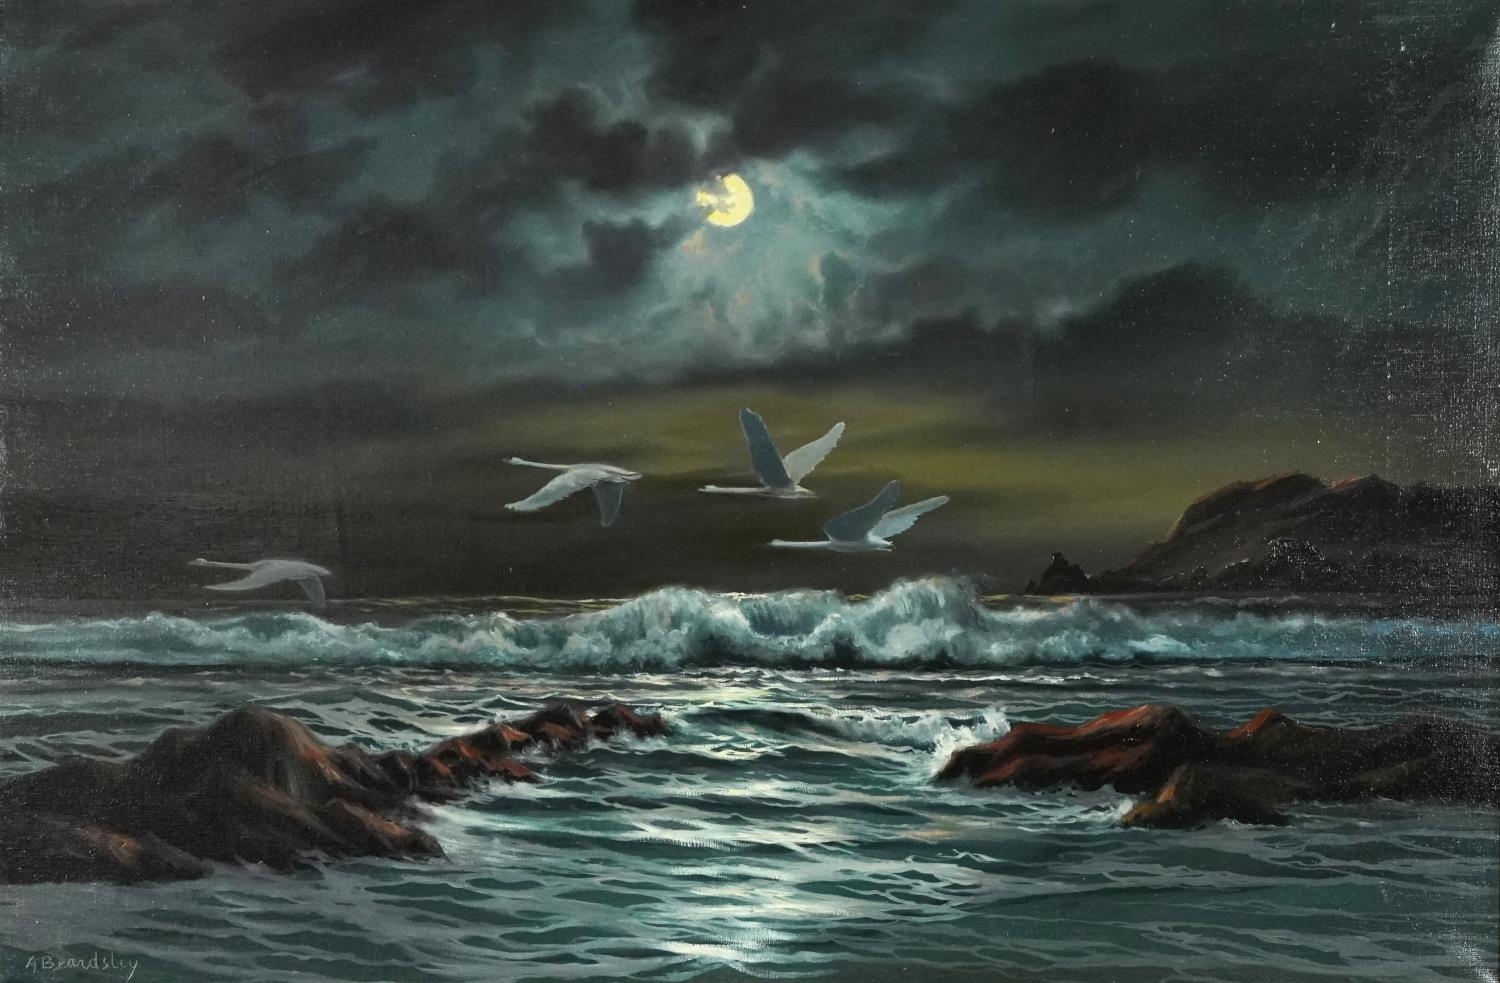 Arnold Beardsley - Moonlit coastal scene with swans, 91cm x 61cm excluding the mount and frame